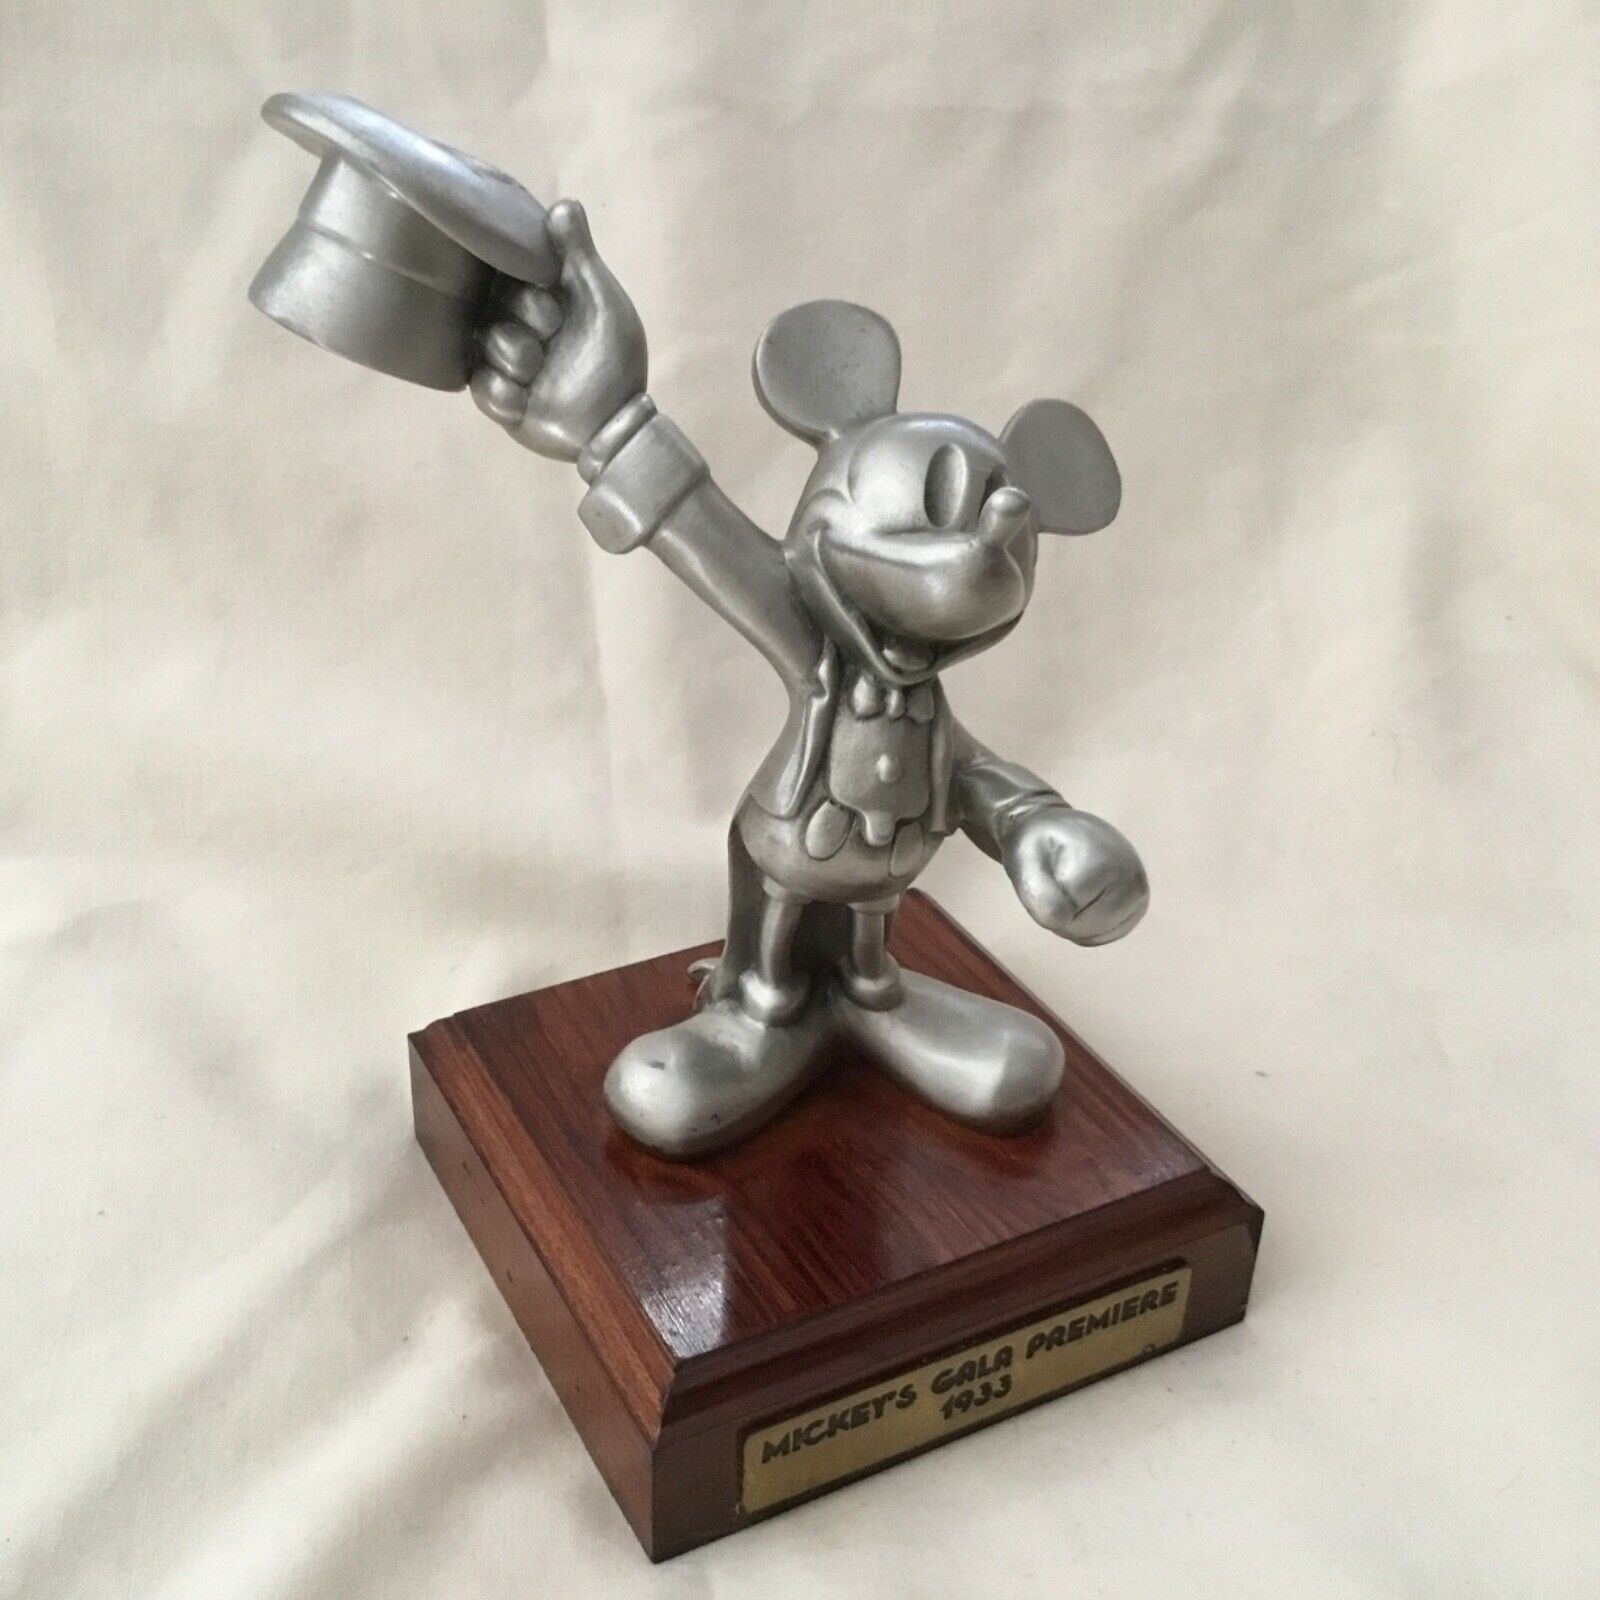 Disney Chilmark Mickey’s Gala Premier Pewter Figurine Statue